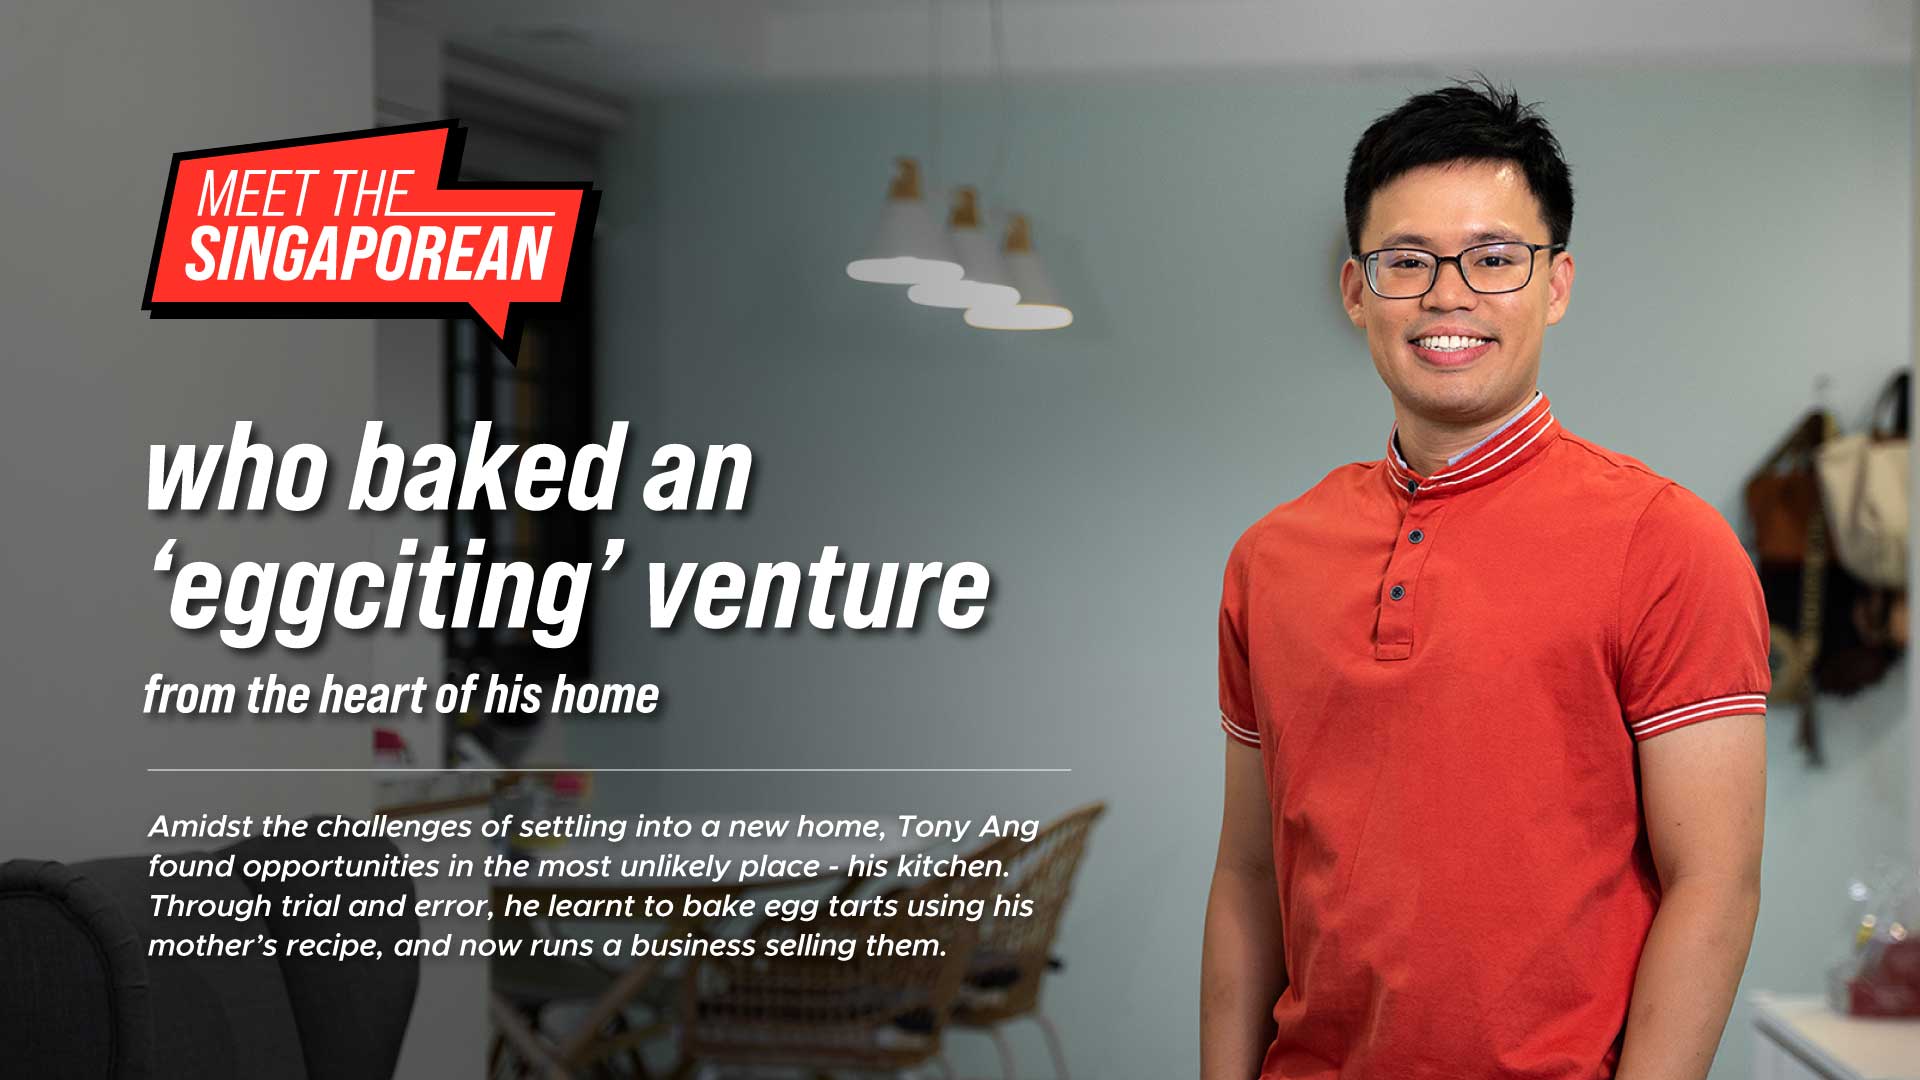 Meet the Singaporean - Tony Ang